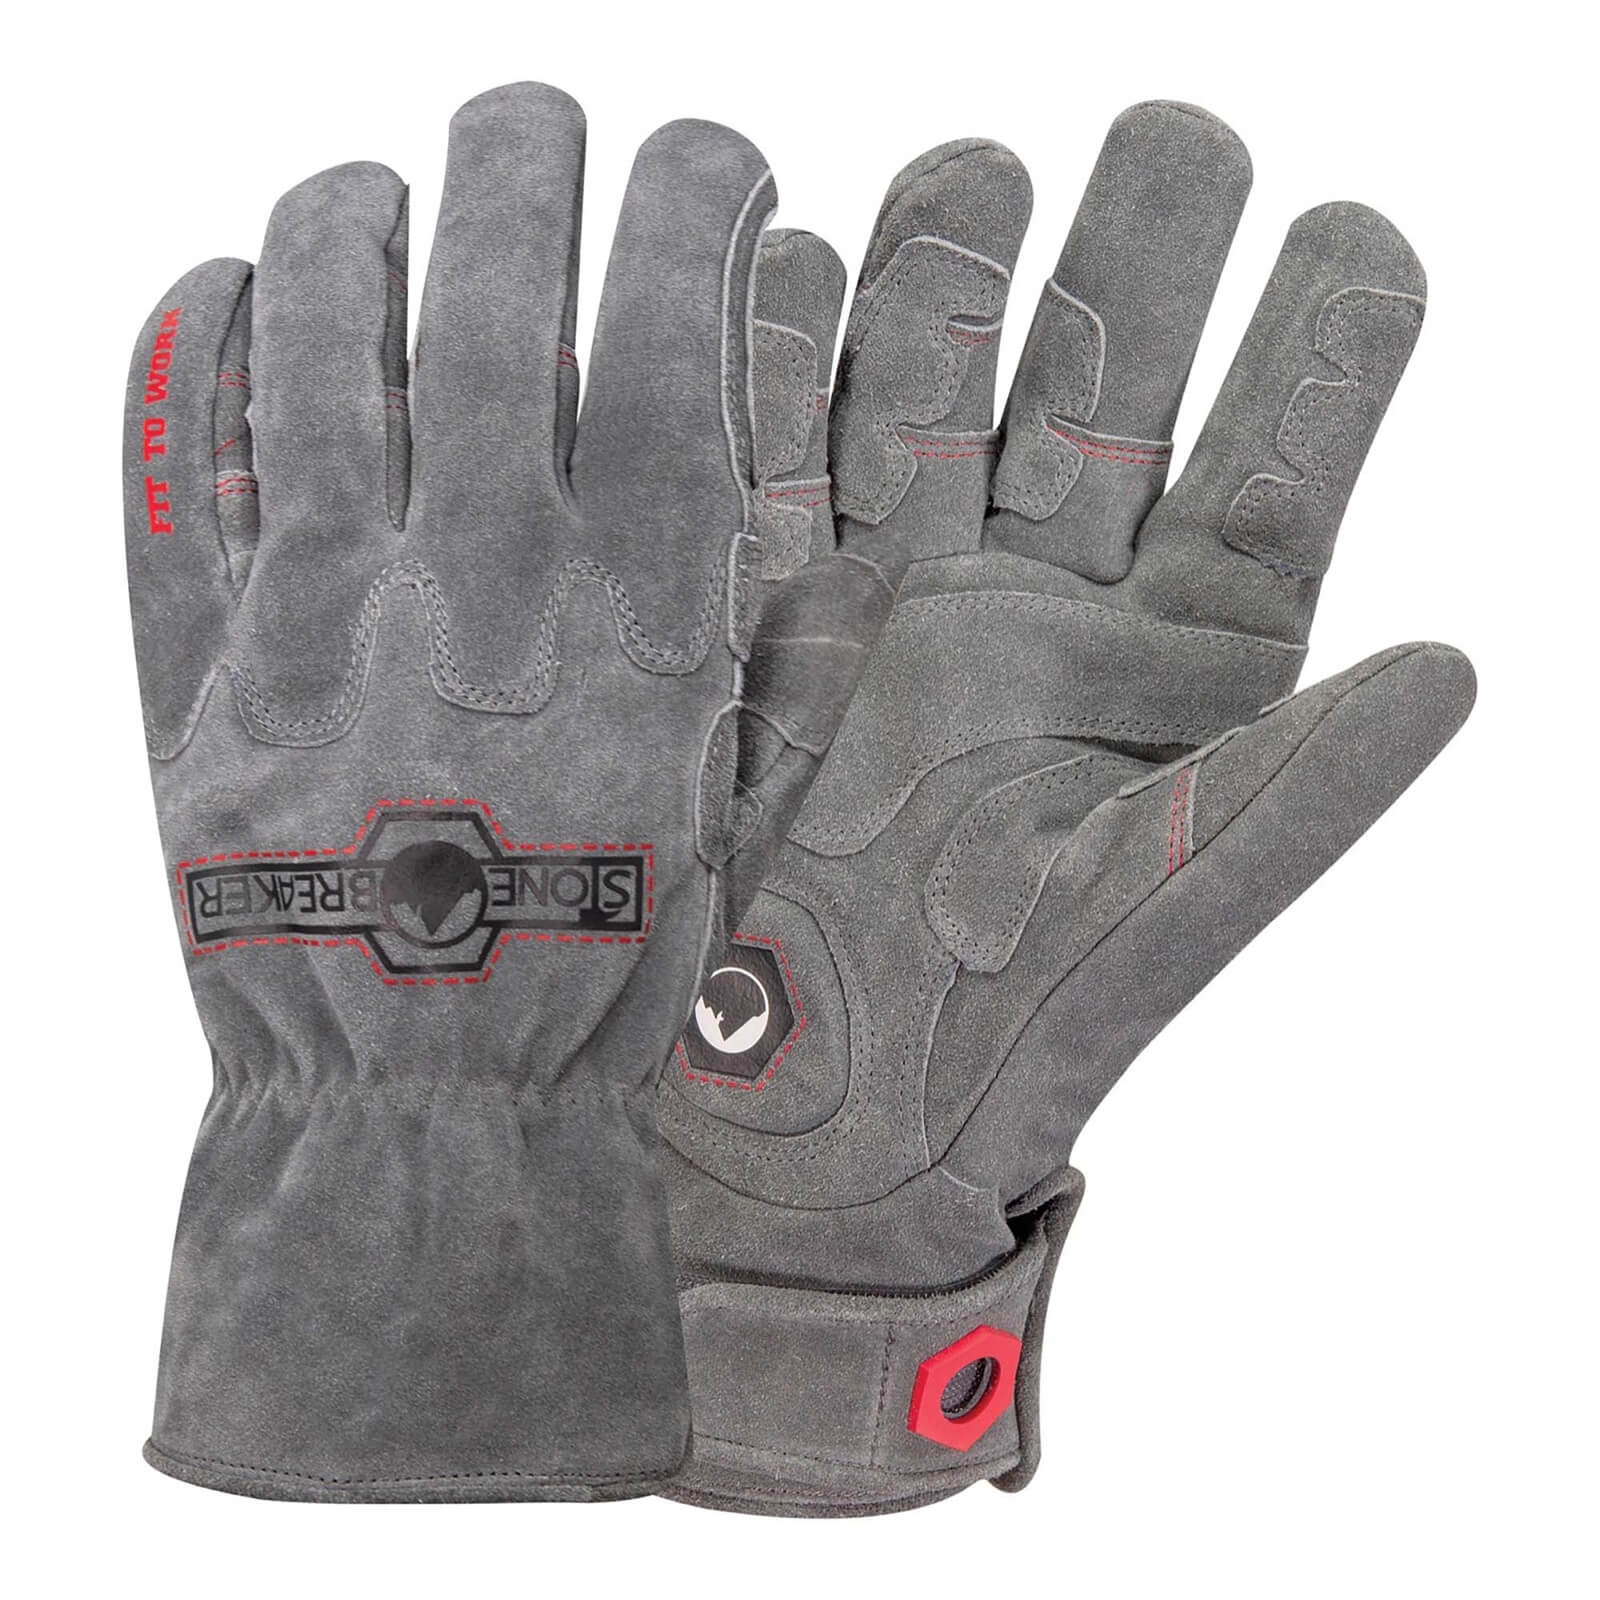 StoneBreaker Trades Winter Demolition Gloves - Extra Large - Grey